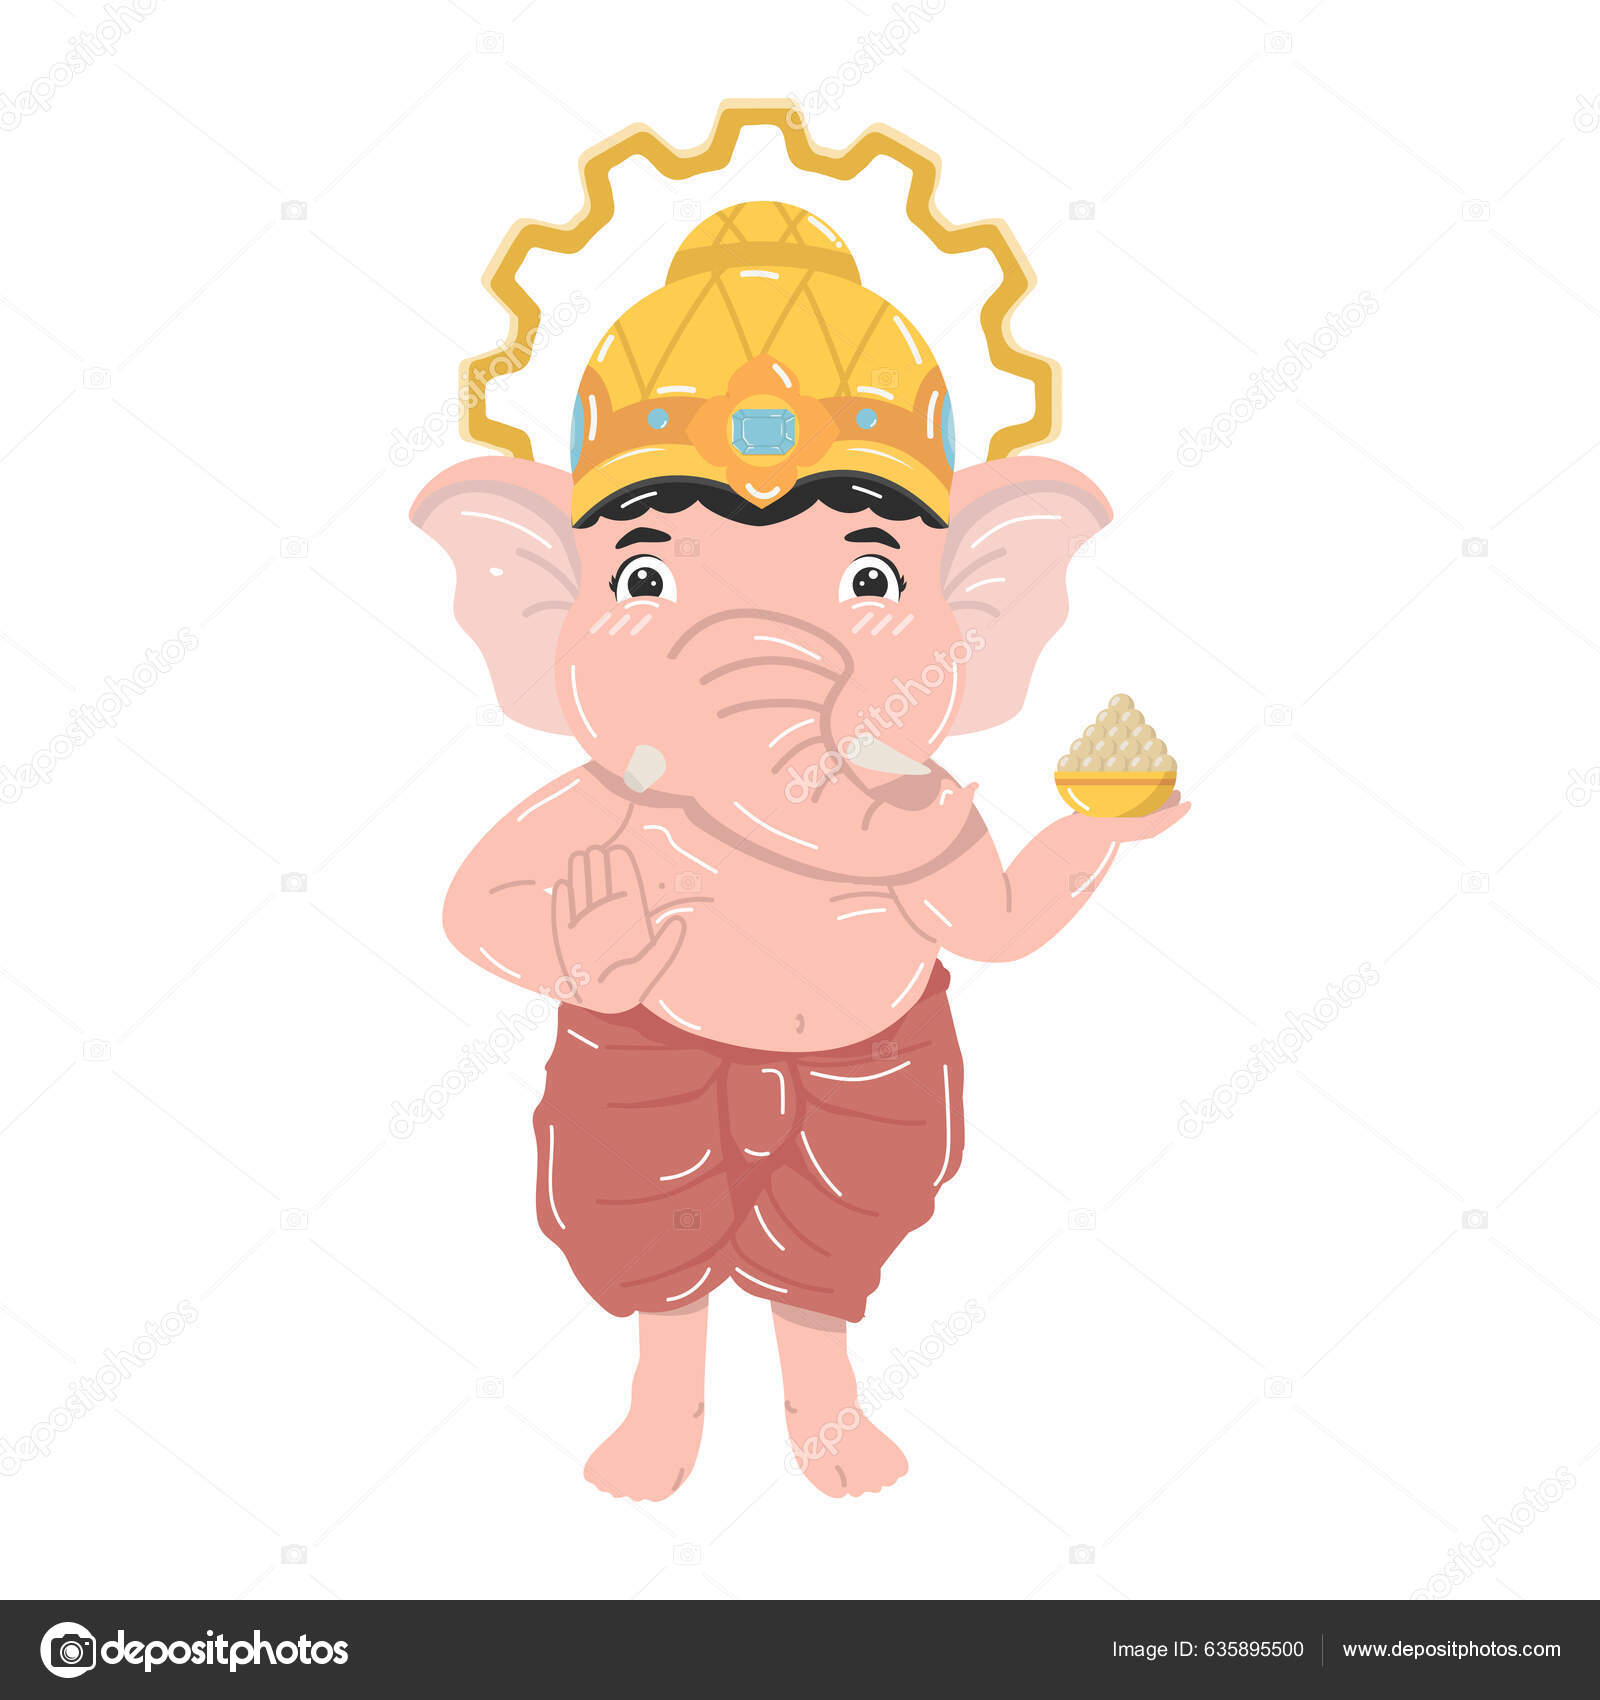 Top 999+ Cute Radha Krishna Wallpaper Full HD, 4K✓Free to Use